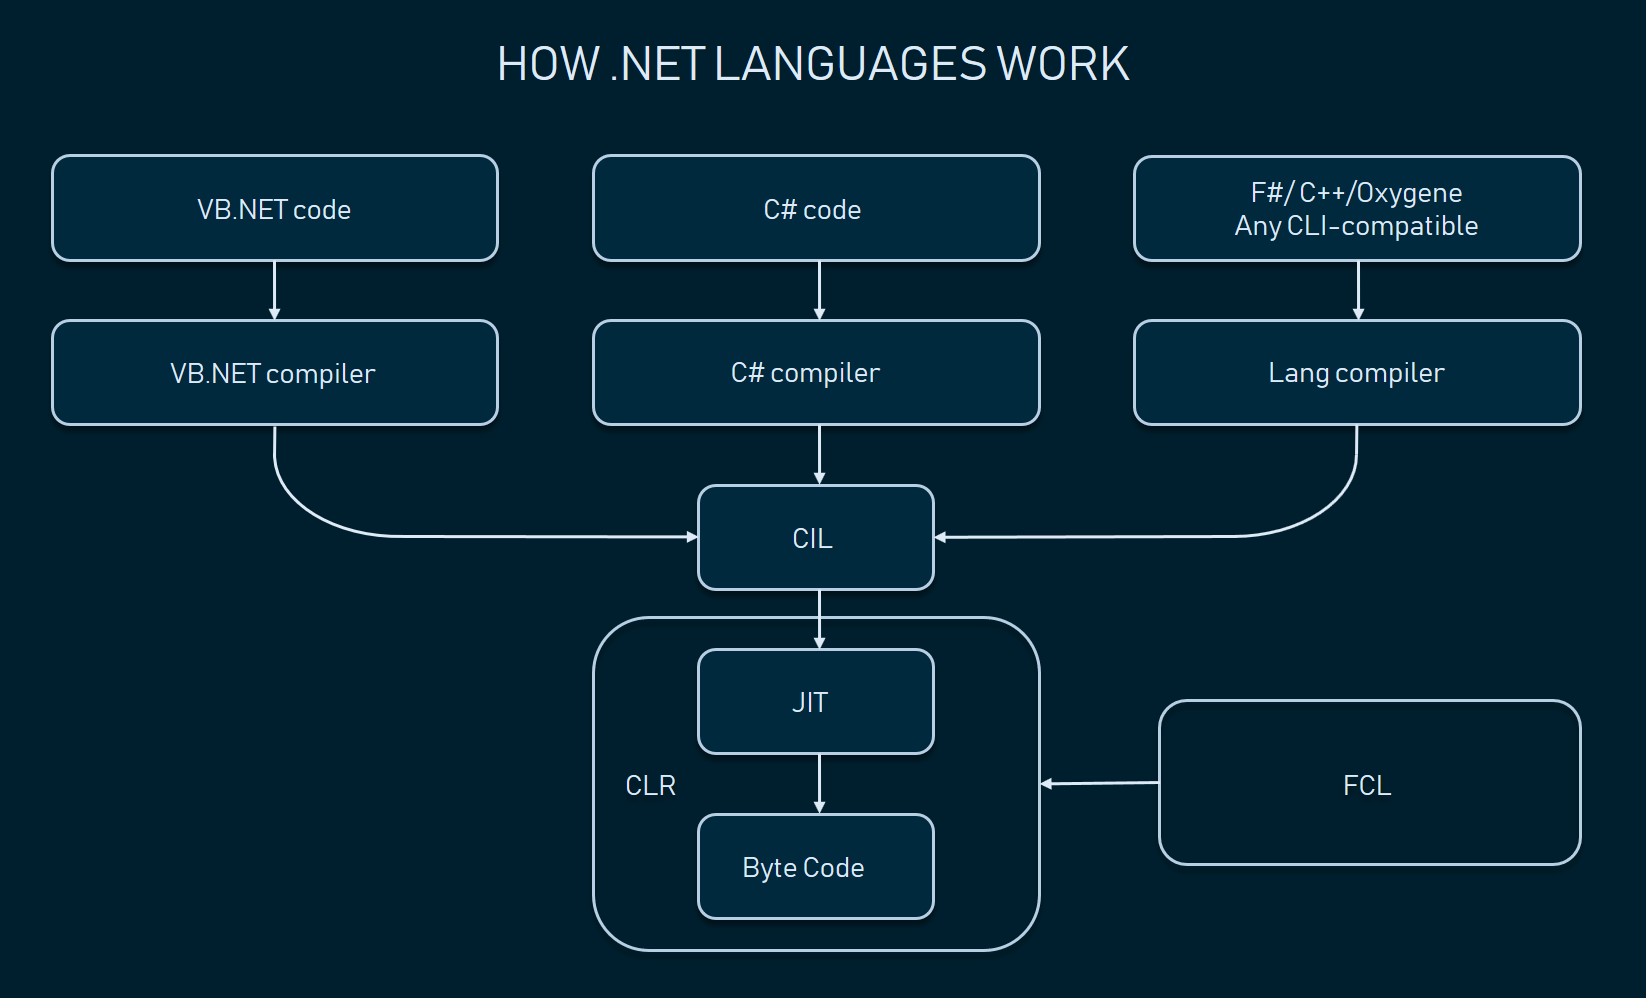 parts of net framework